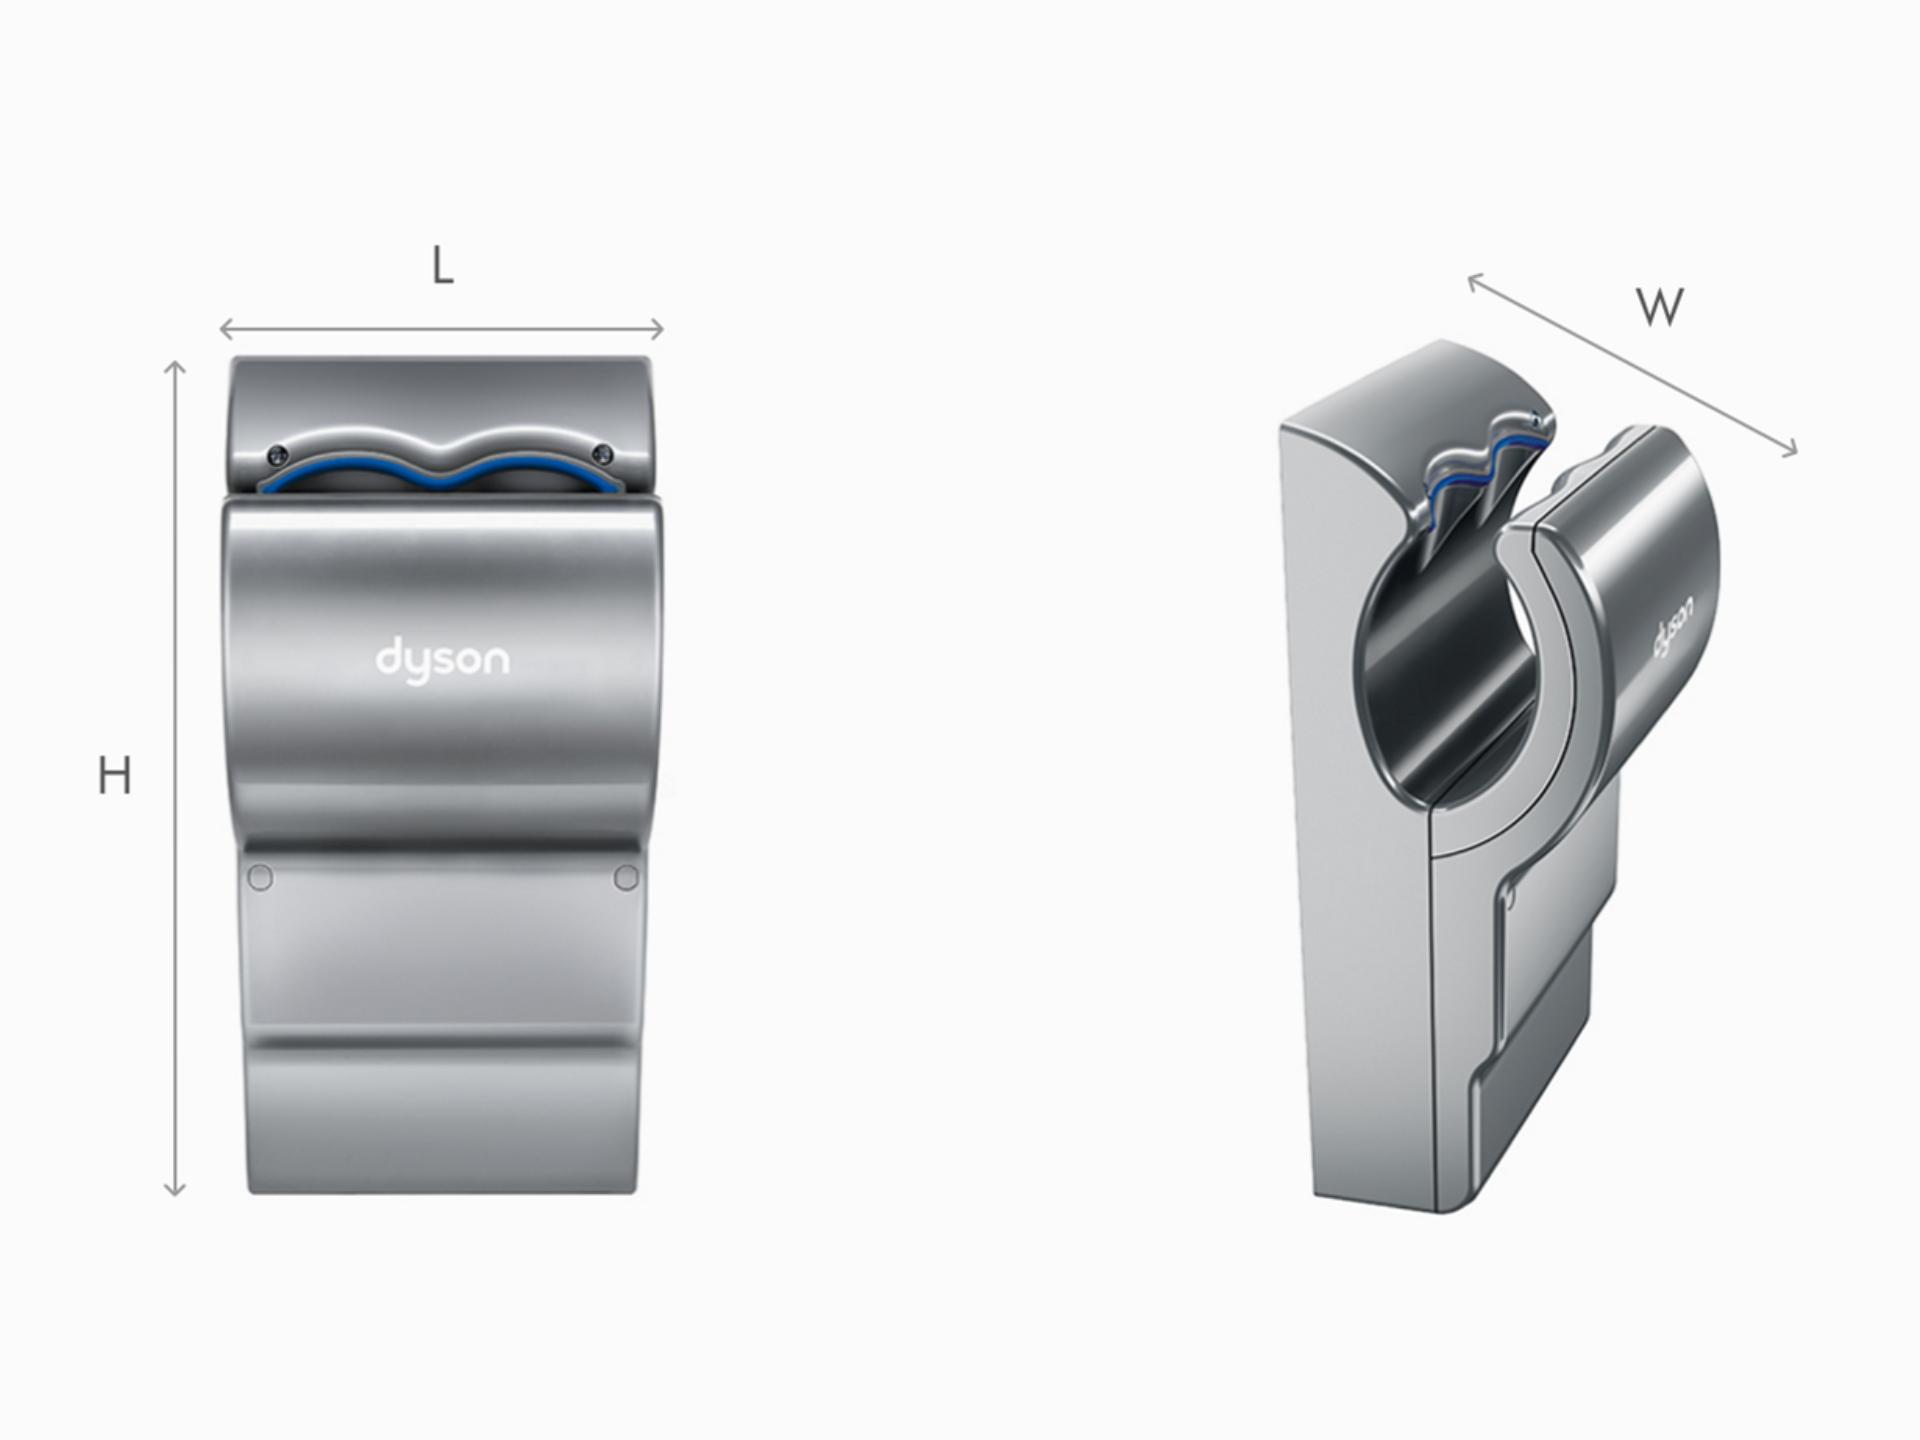 Dyson Airblade dB gri el kurutma makinesi boyutlarının çizimi